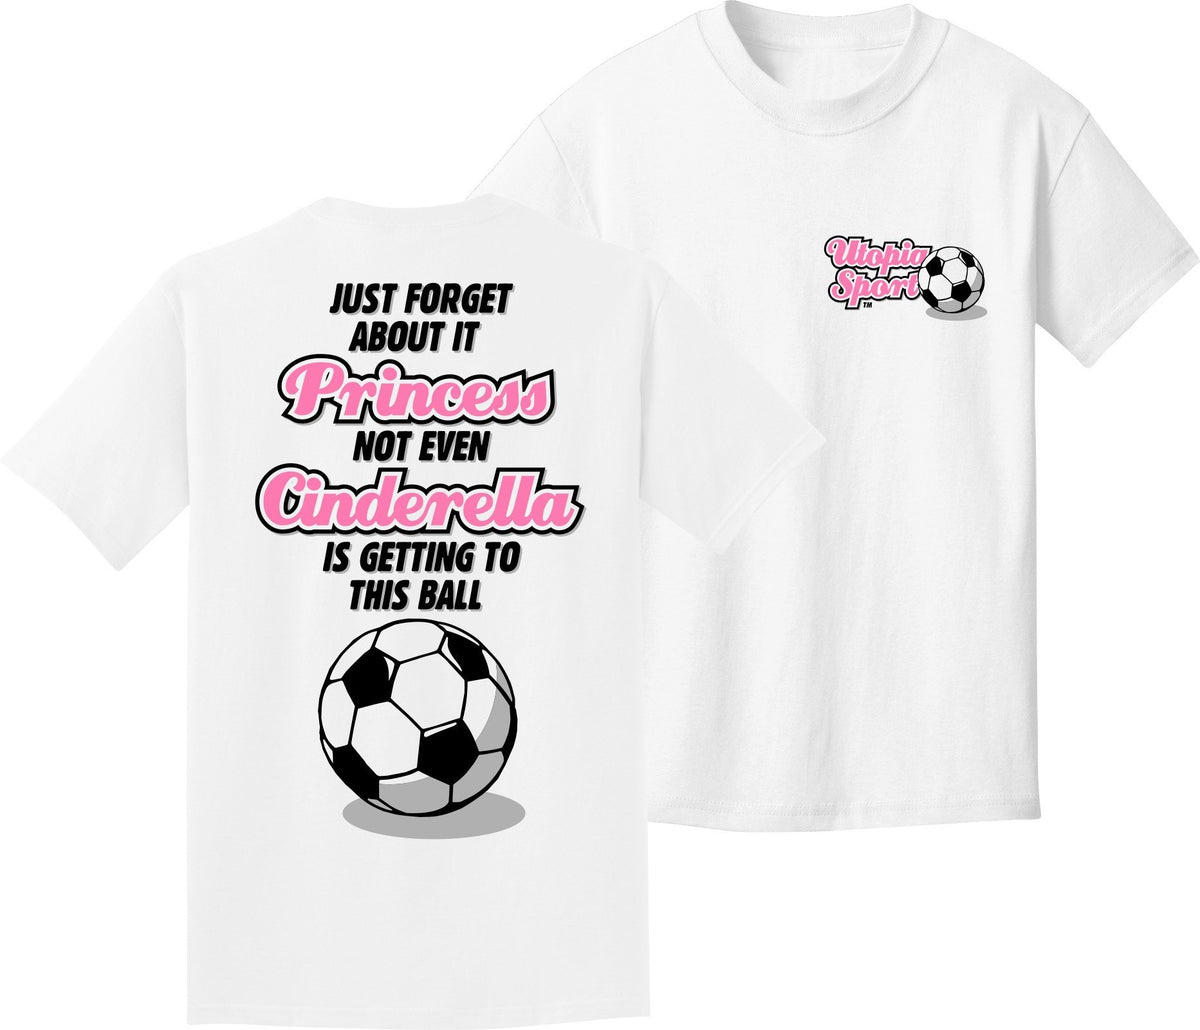 Utopia Cinderella Short Sleeve Soccer T-Shirt Humorous Shirt Utopia Adult Small White 